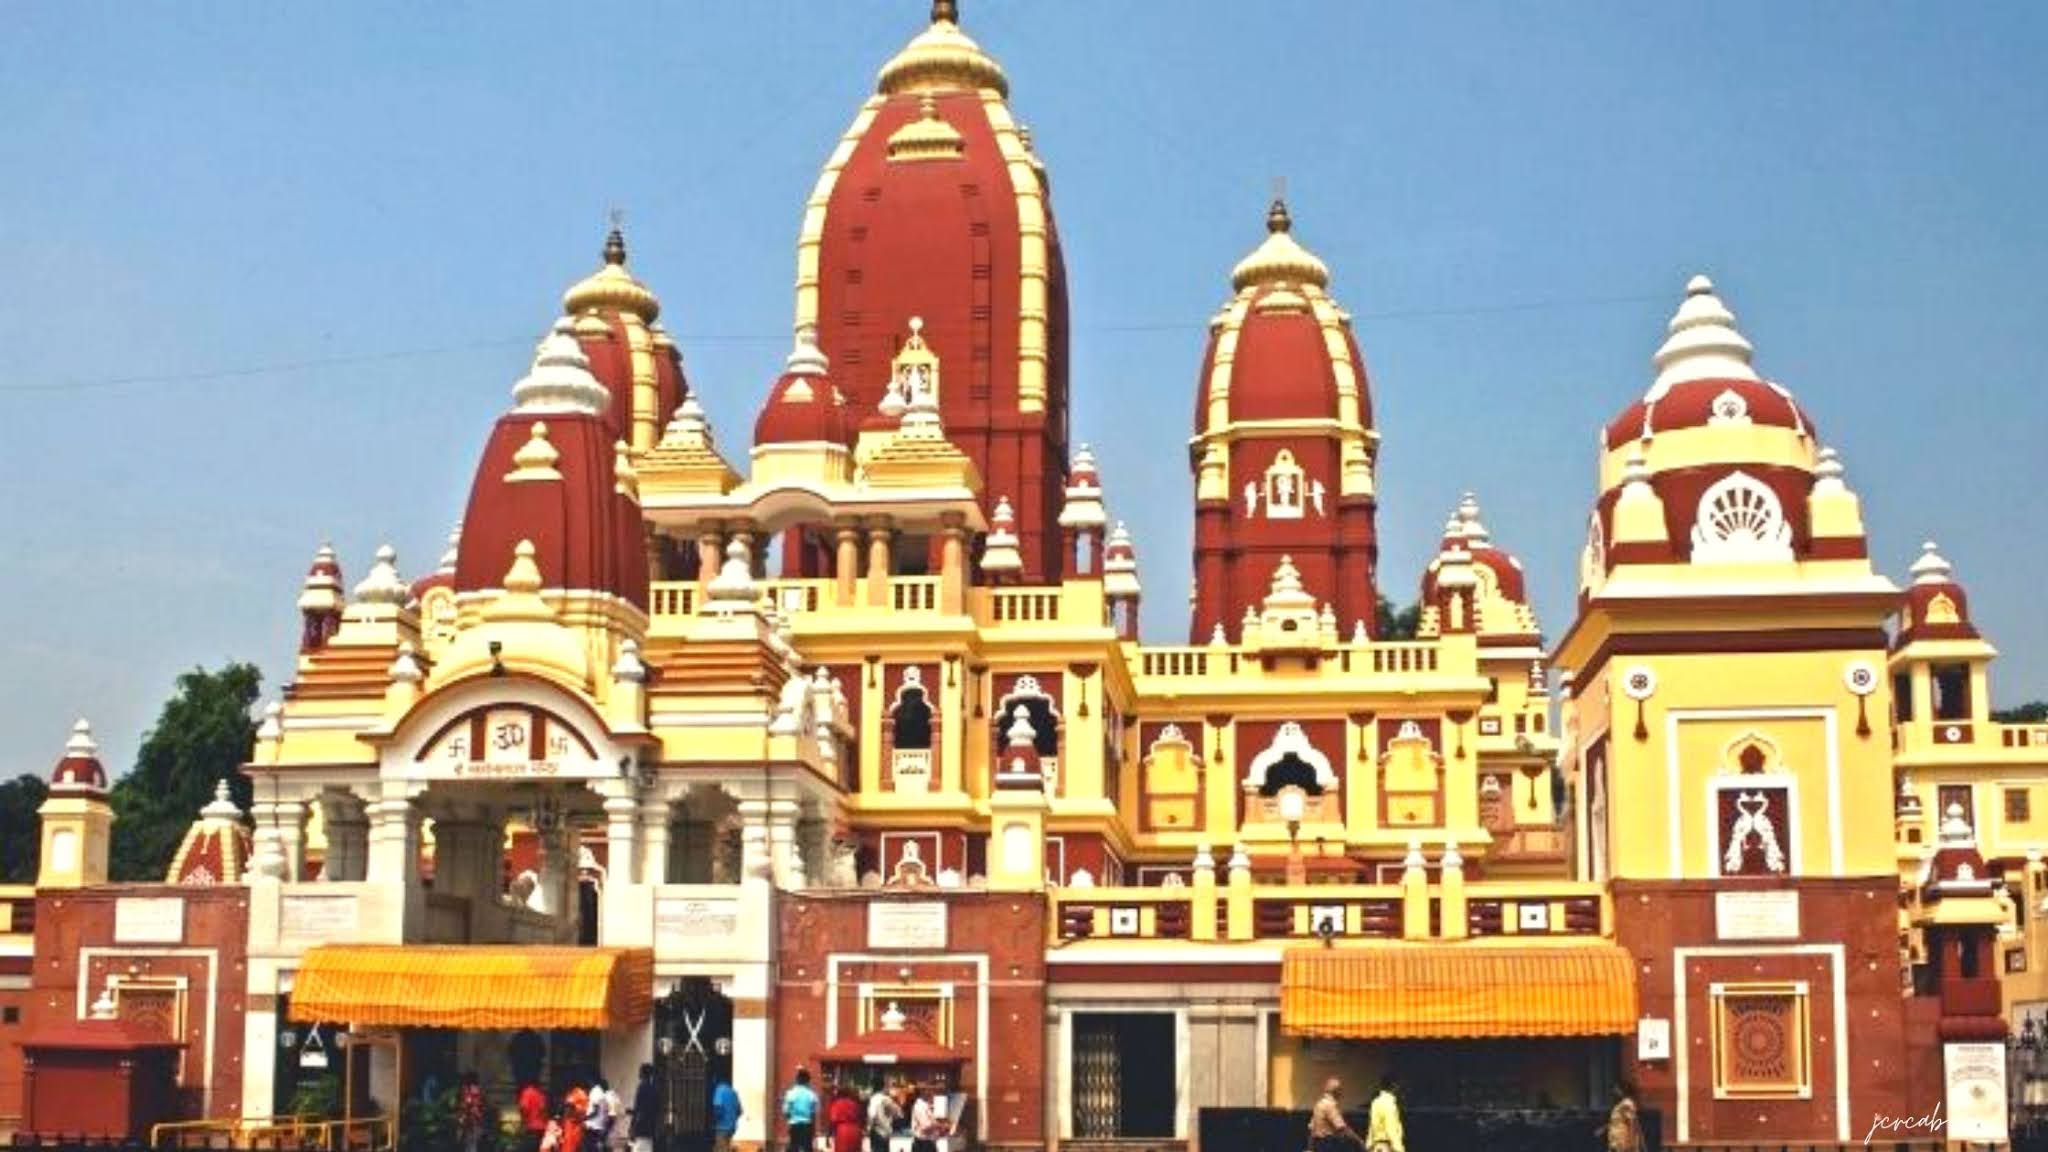 Knowledge of Govind Dev ji temple of Jaipur